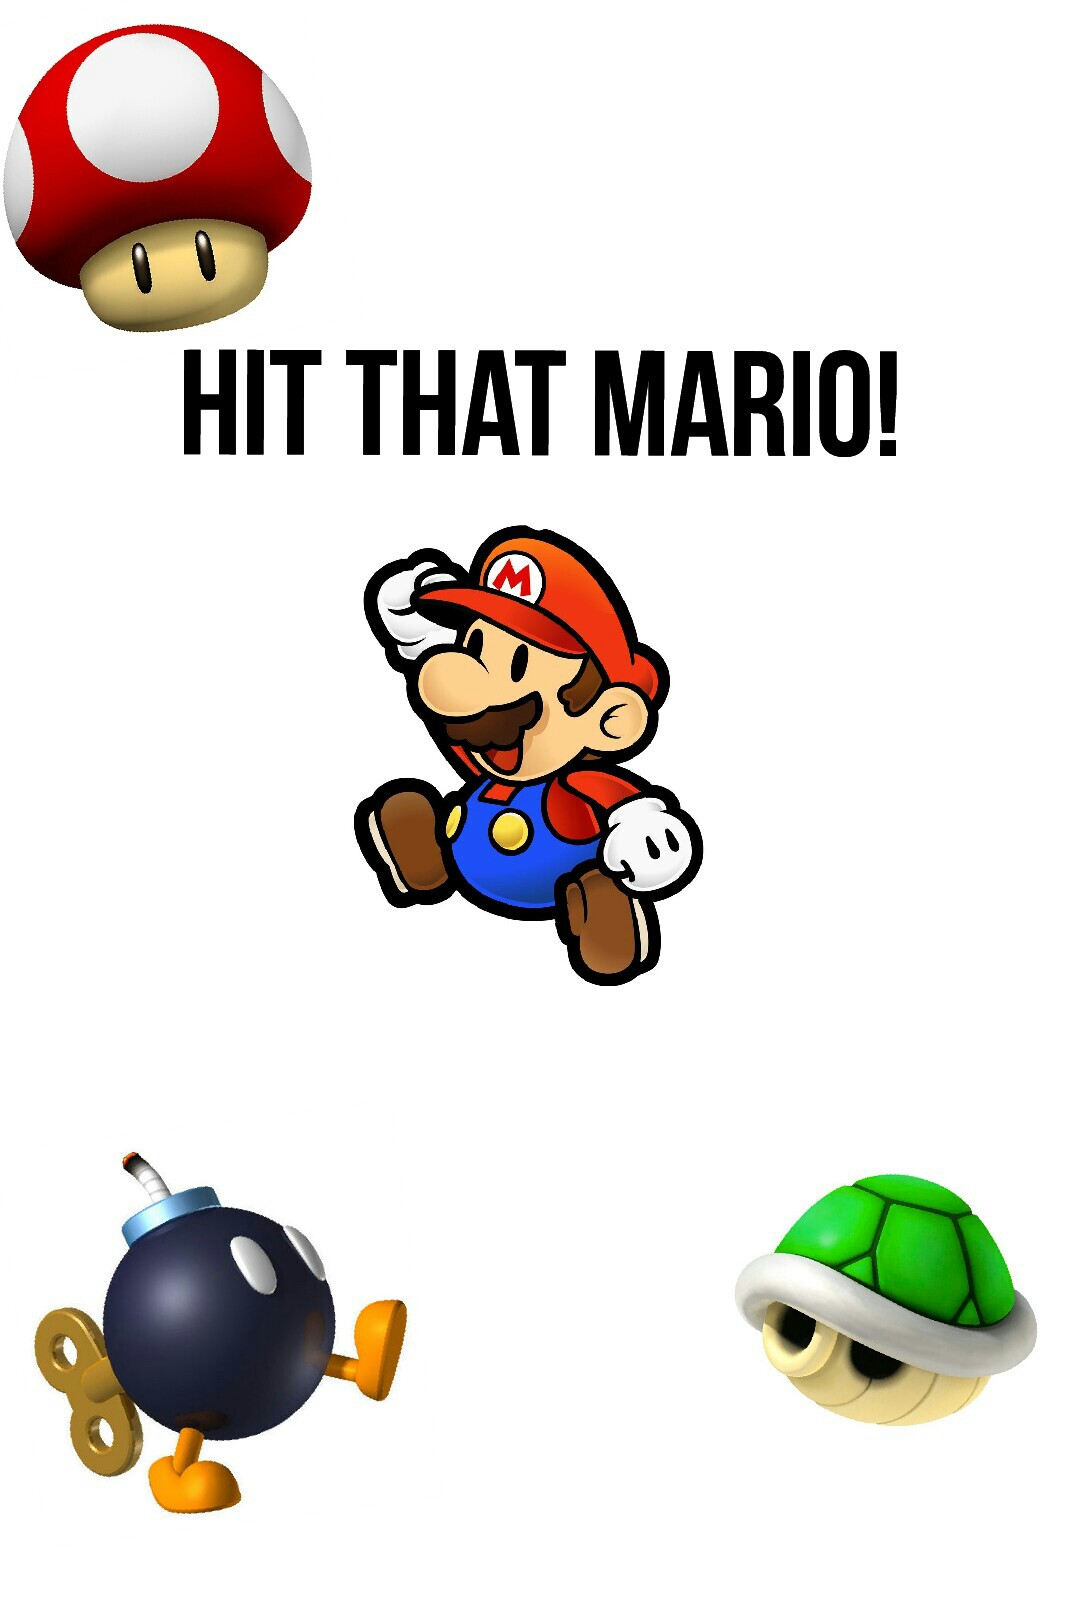 Hit that Mario!